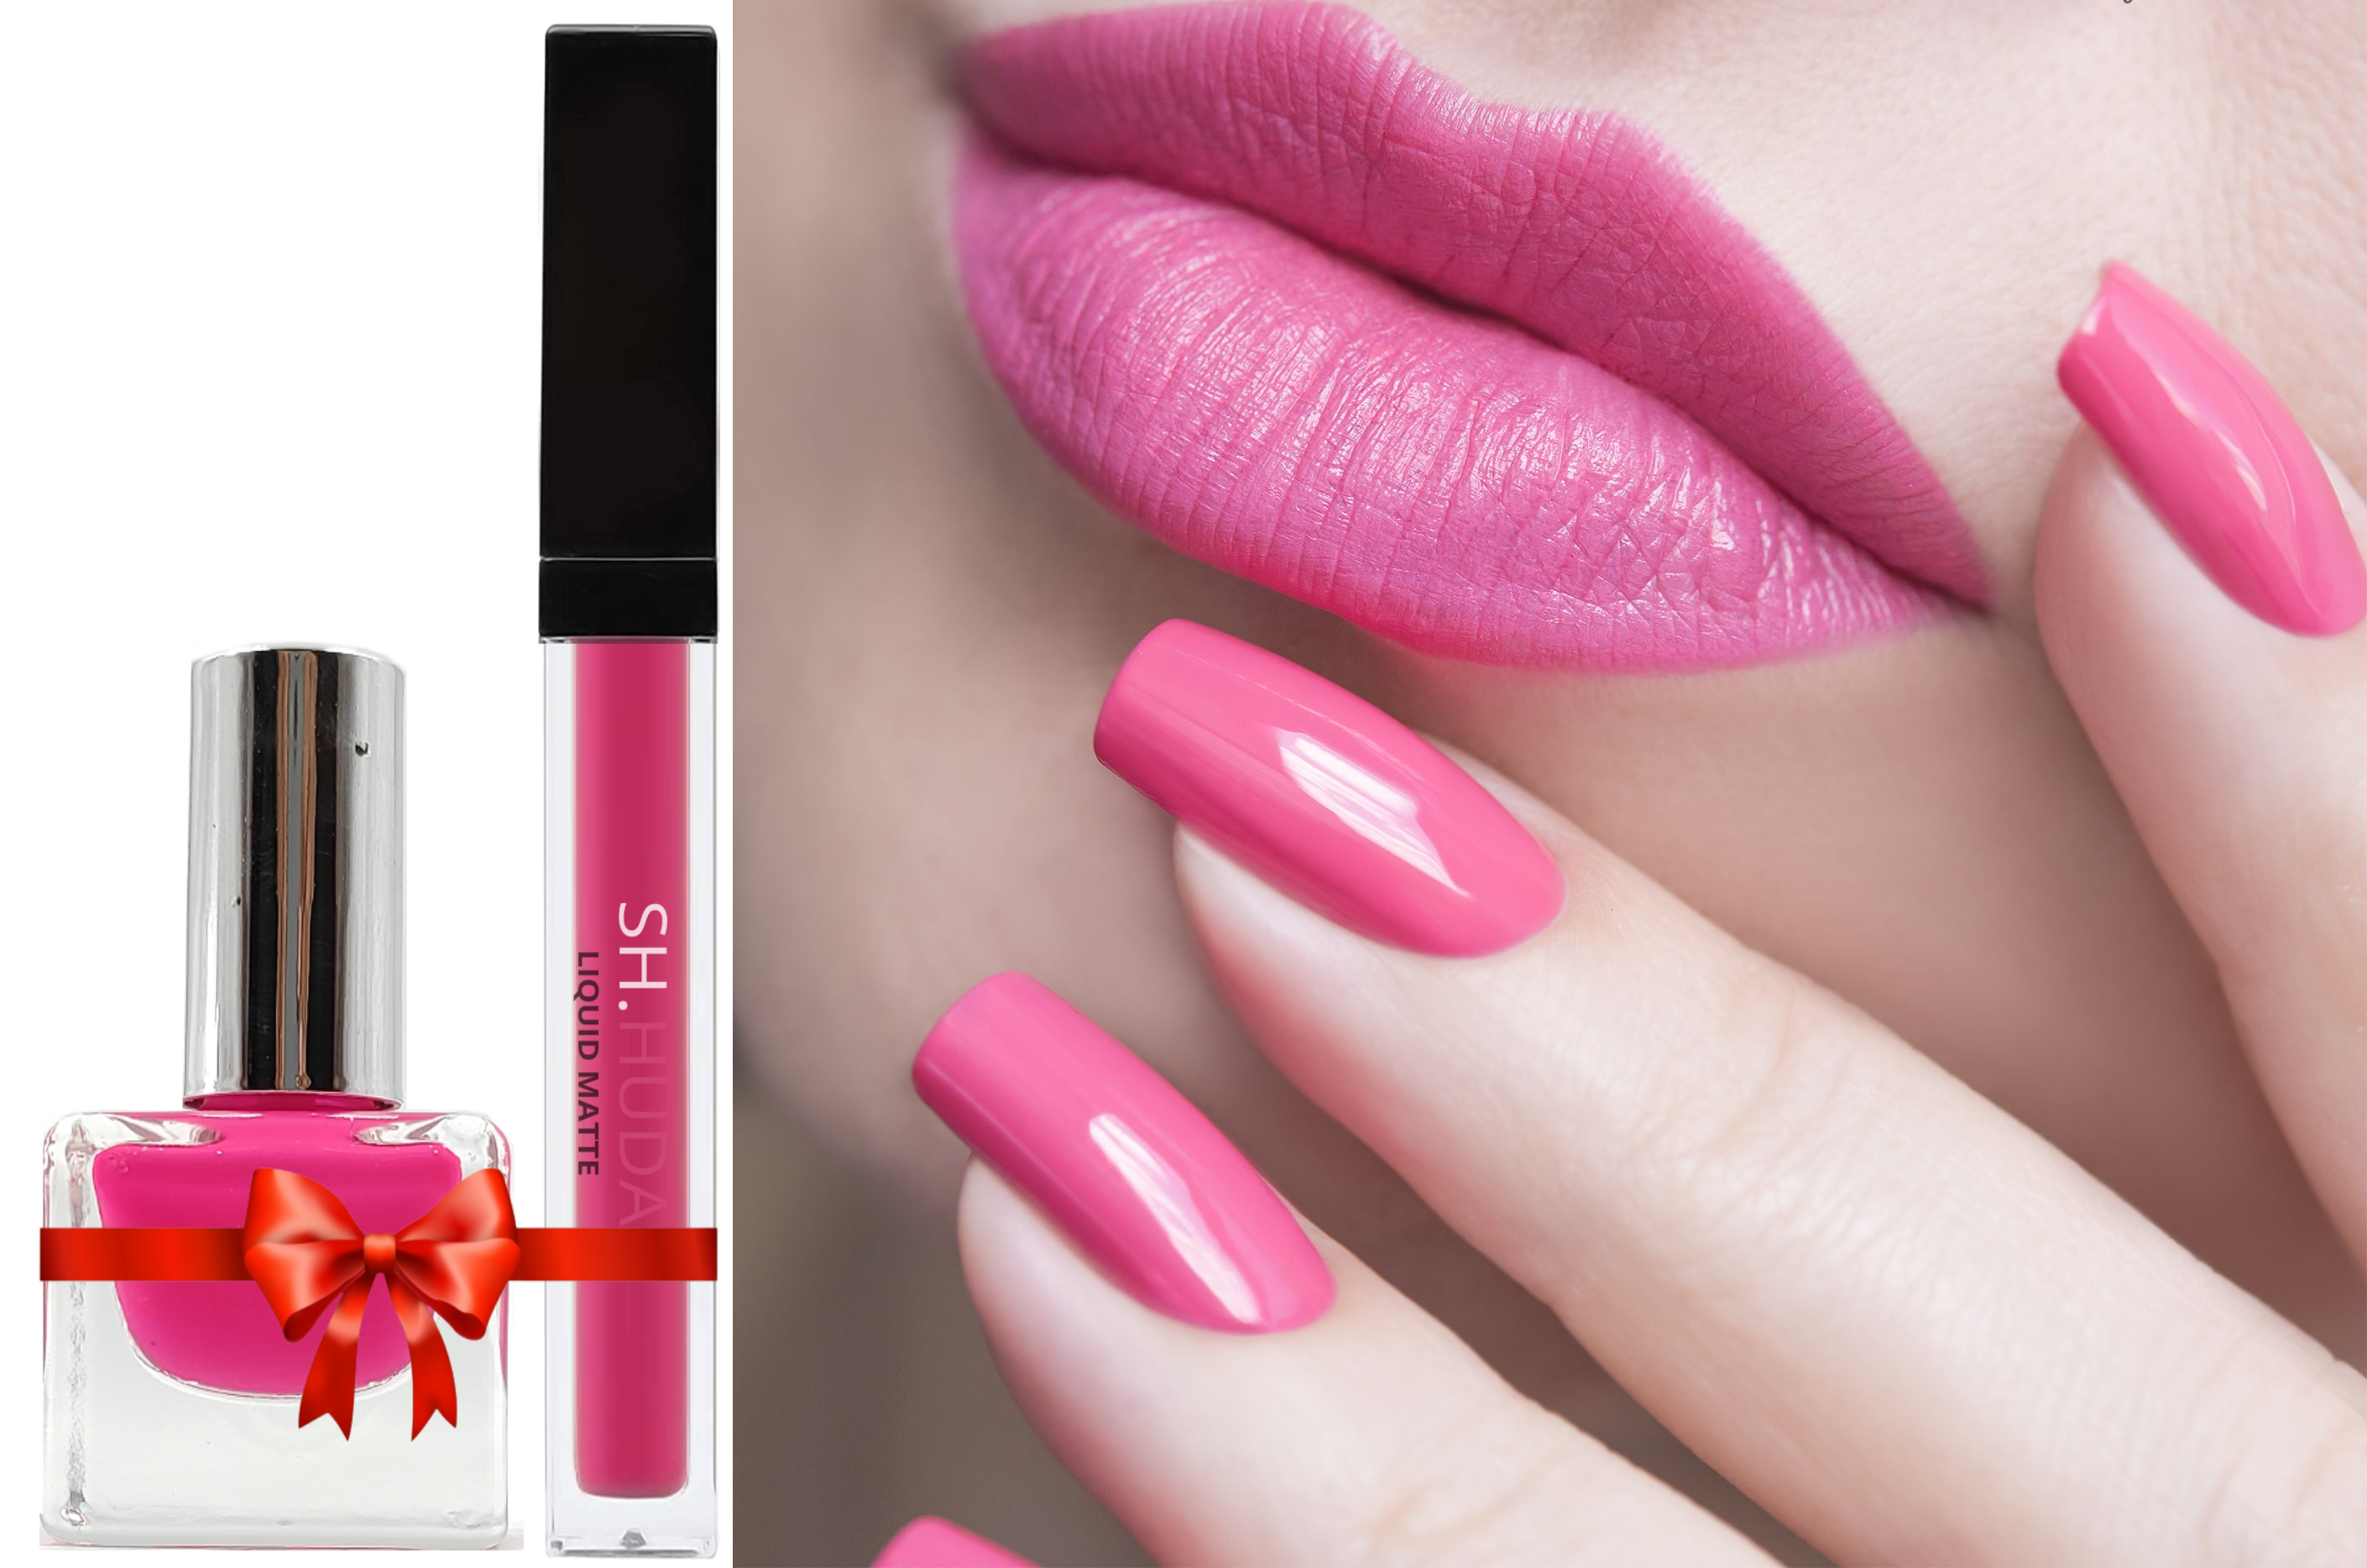  Professional Beauty Lipsticks for Women with Matching Shade Nail  Polish (Pink Edition) - JioMart